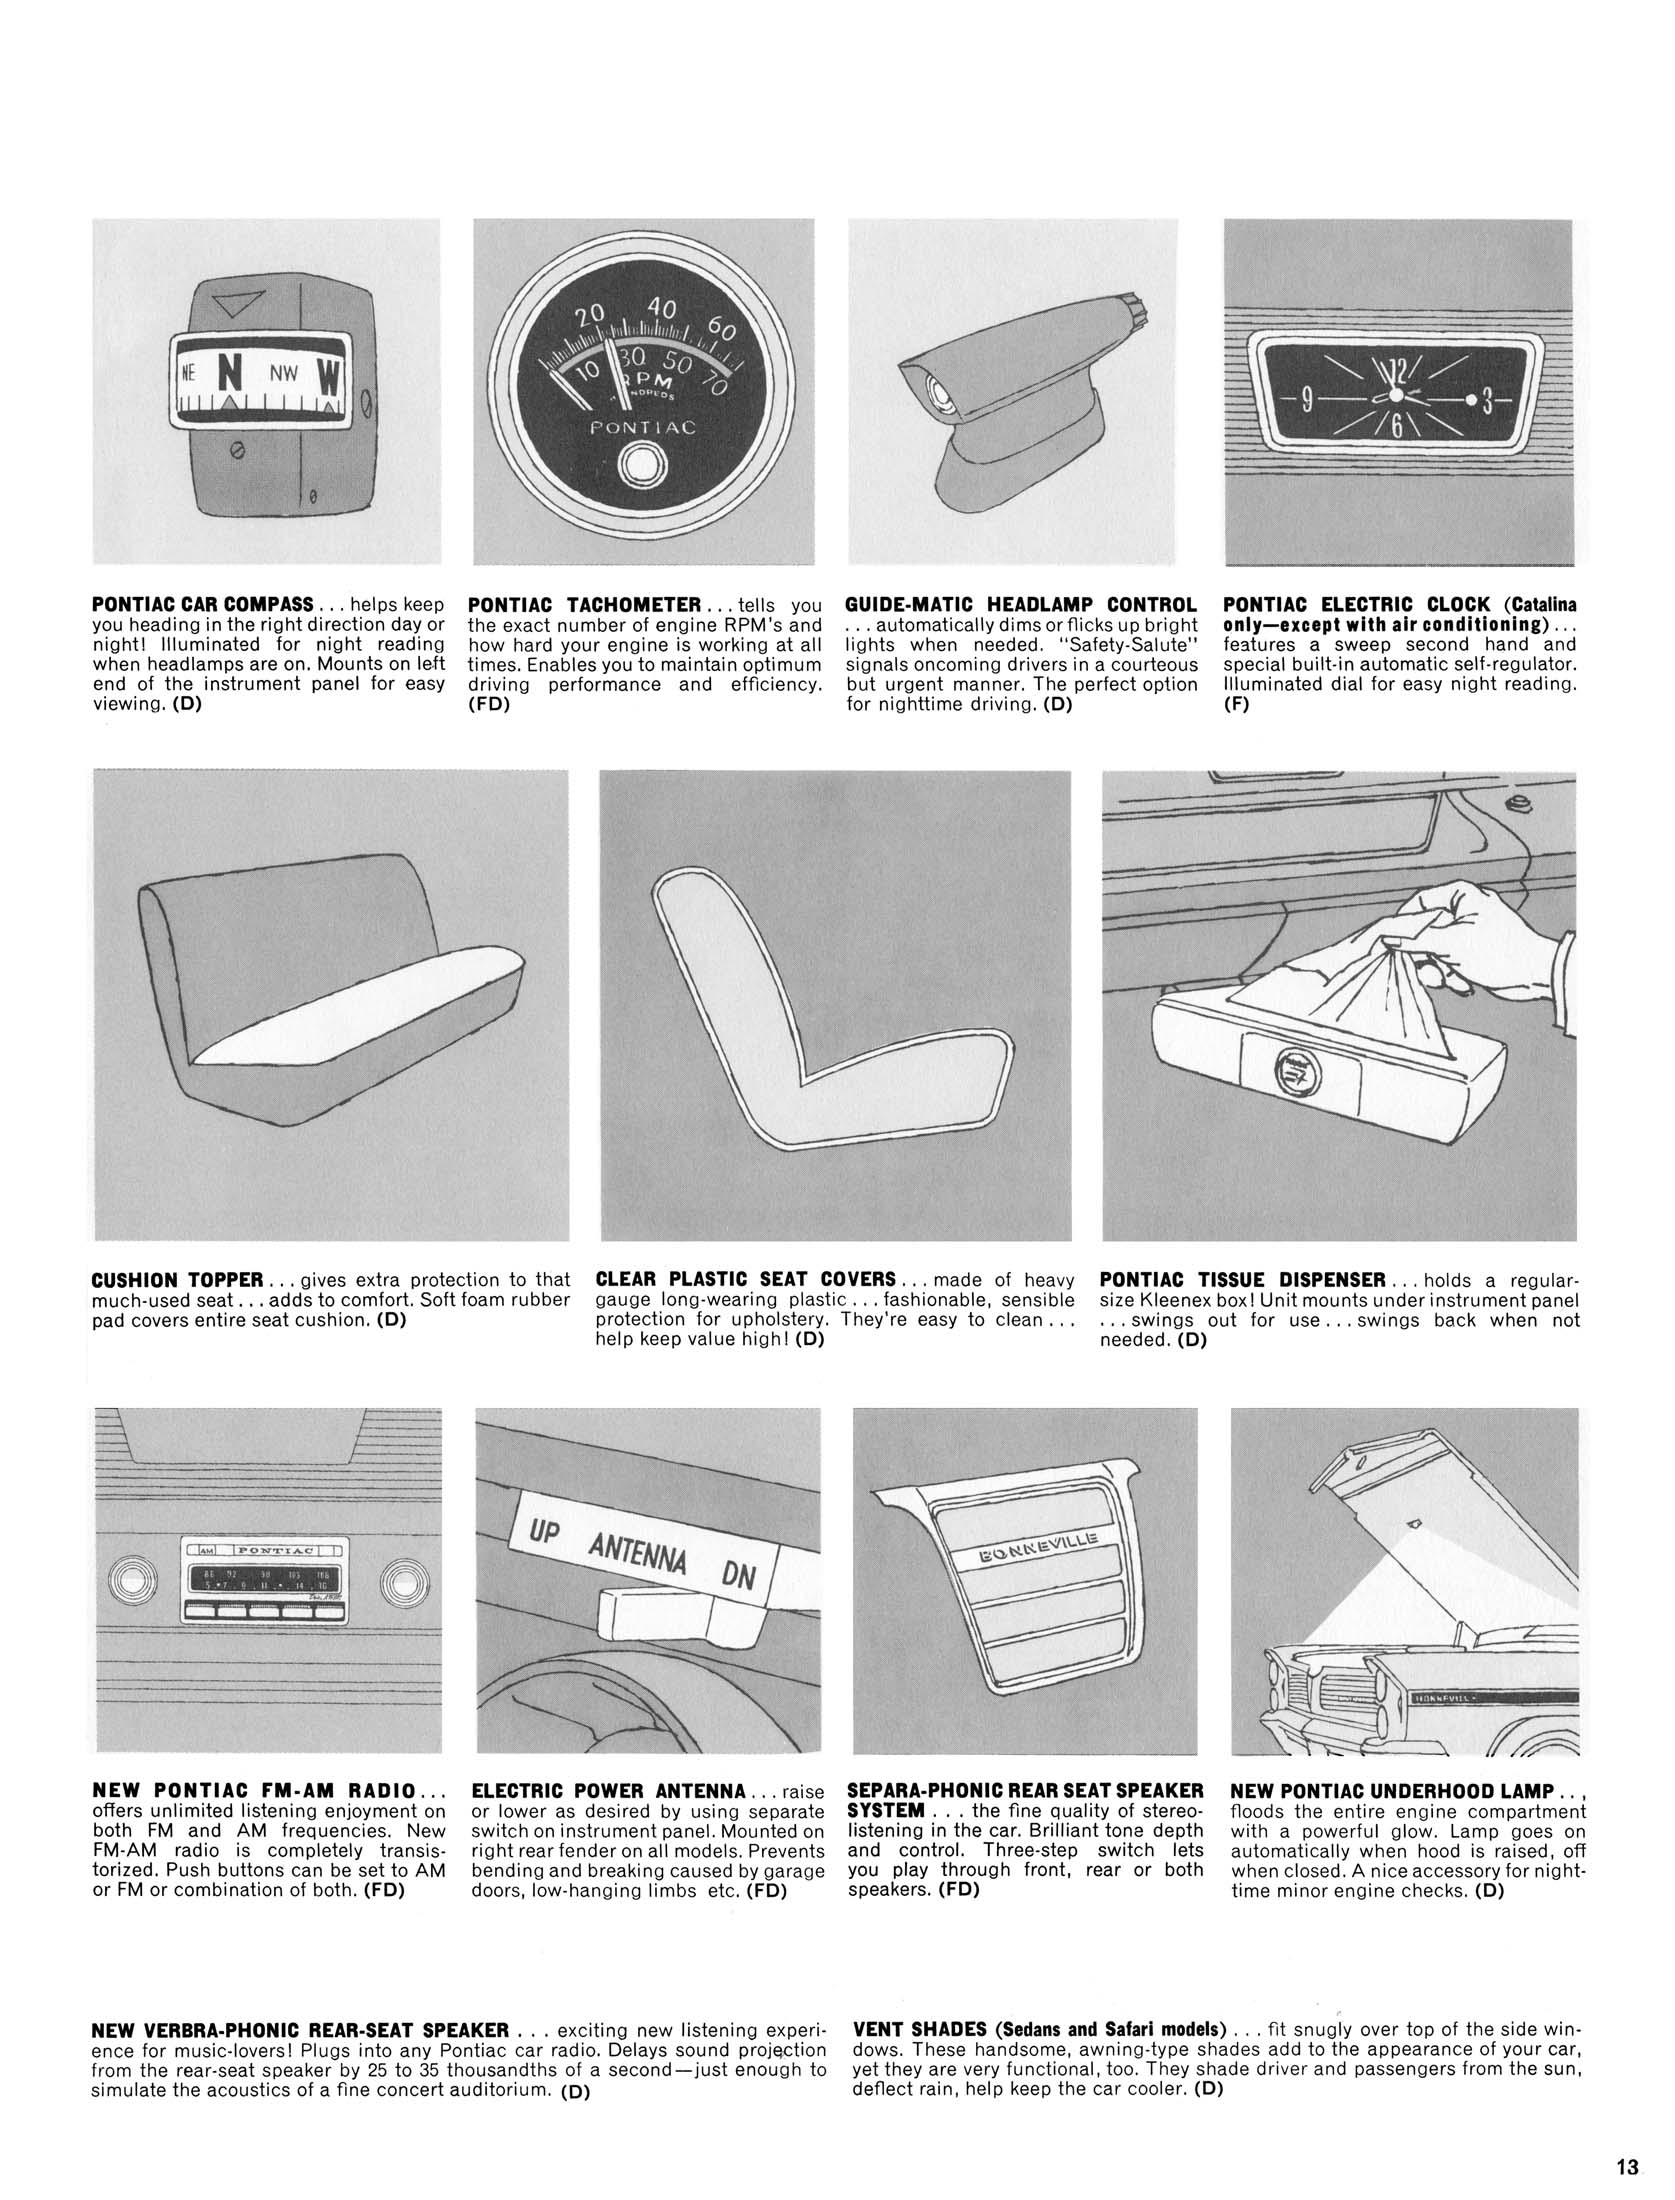 1963_Pontiac_Accessories-13